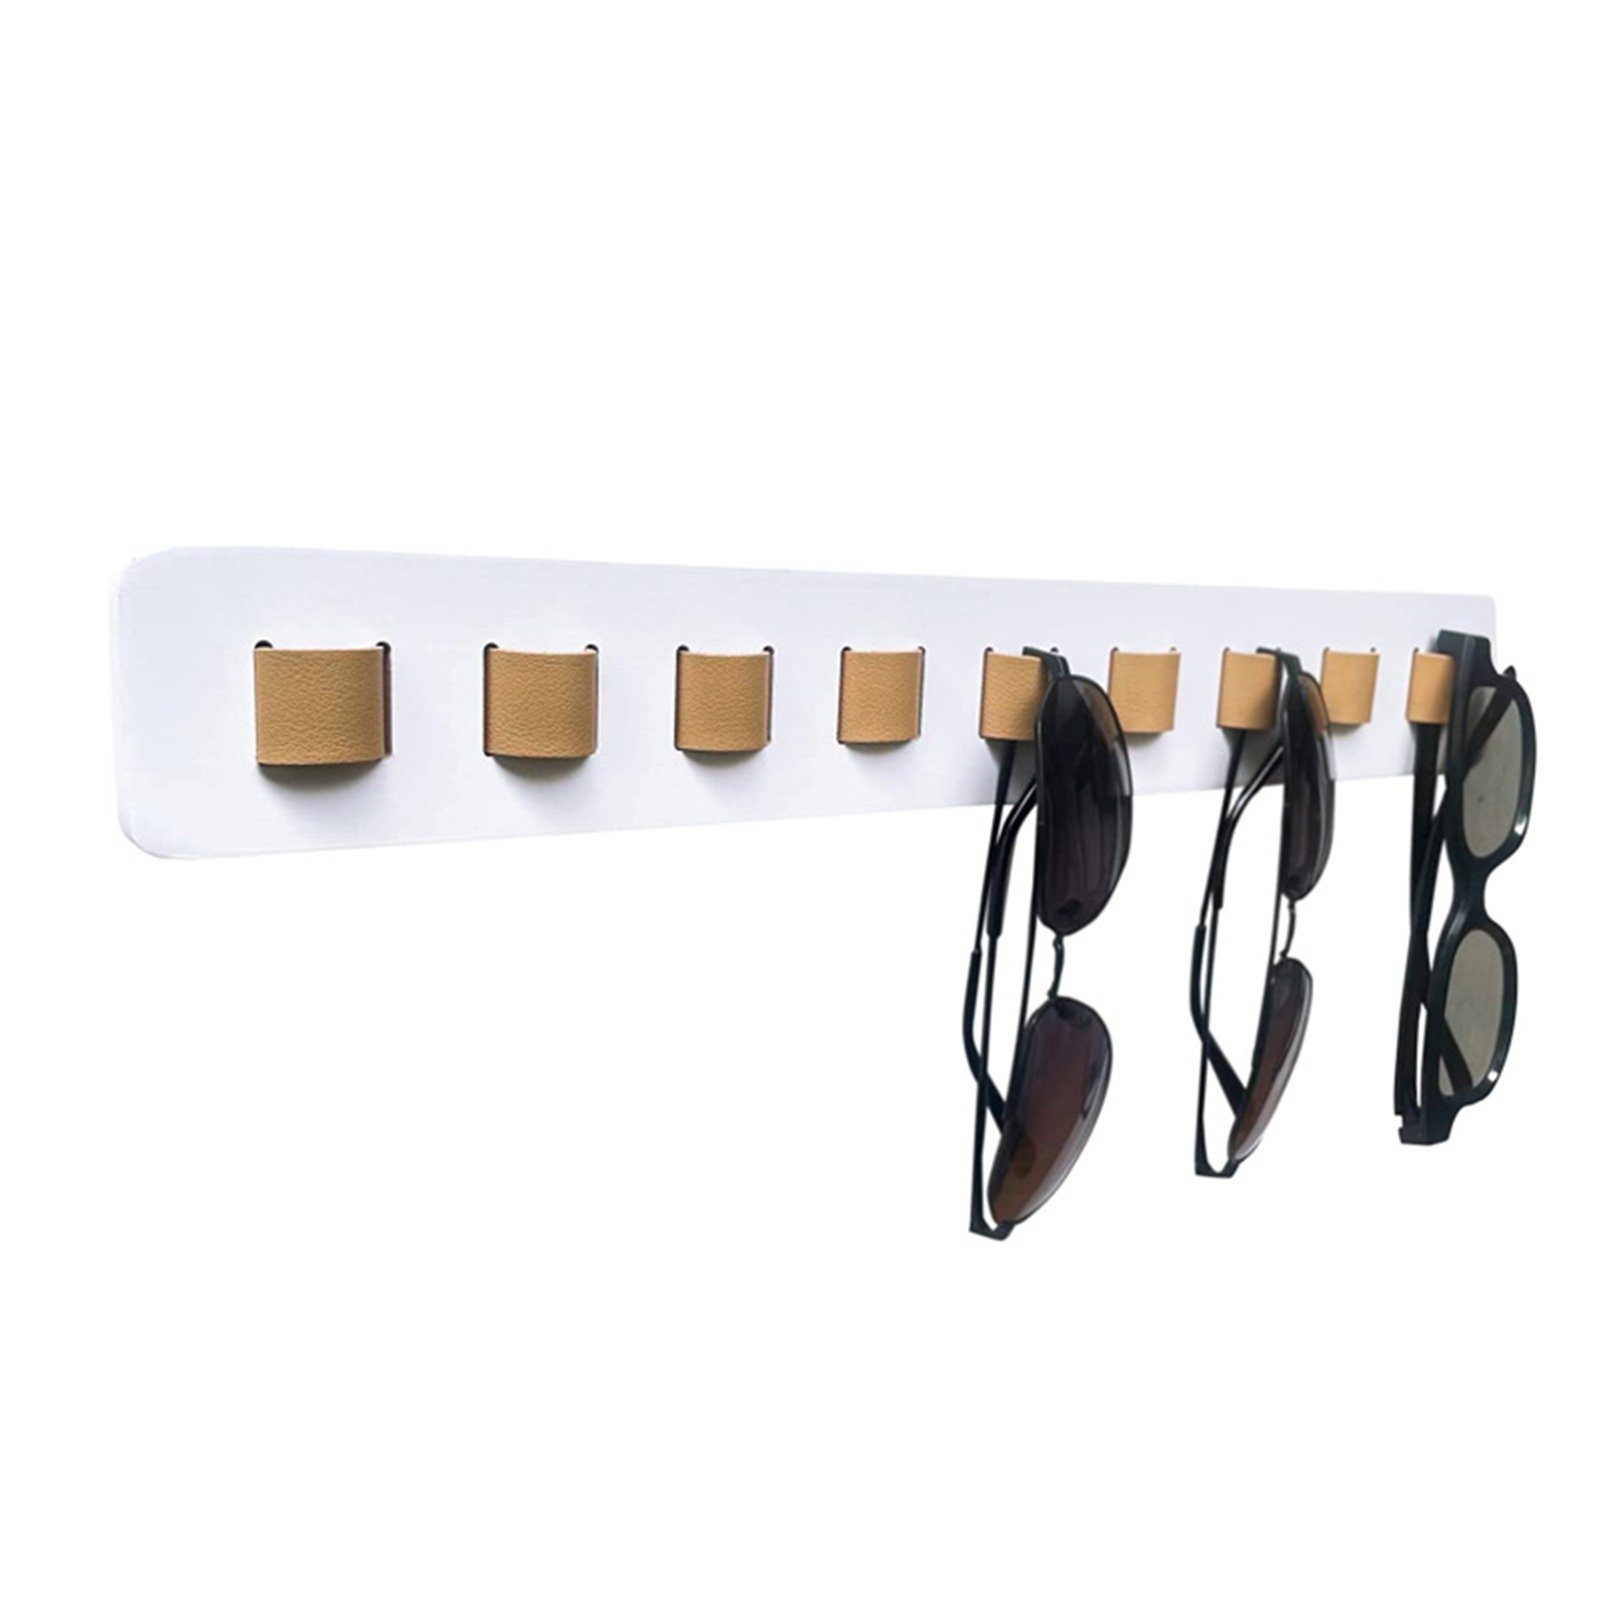 Rutaqian Brillengestell hölzerne Sonnenbrillen Lagerung Wand montiert Brillengestell